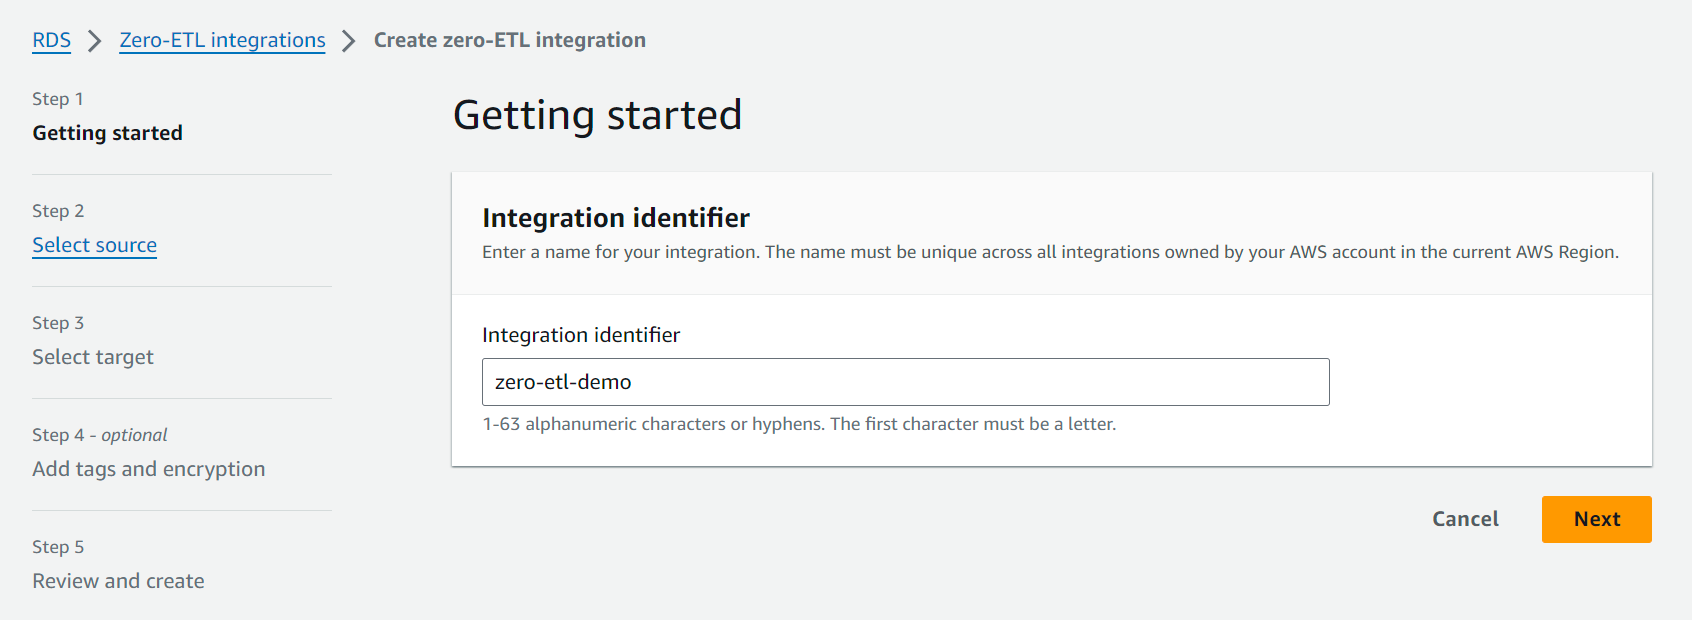 Enter the Integration identifier